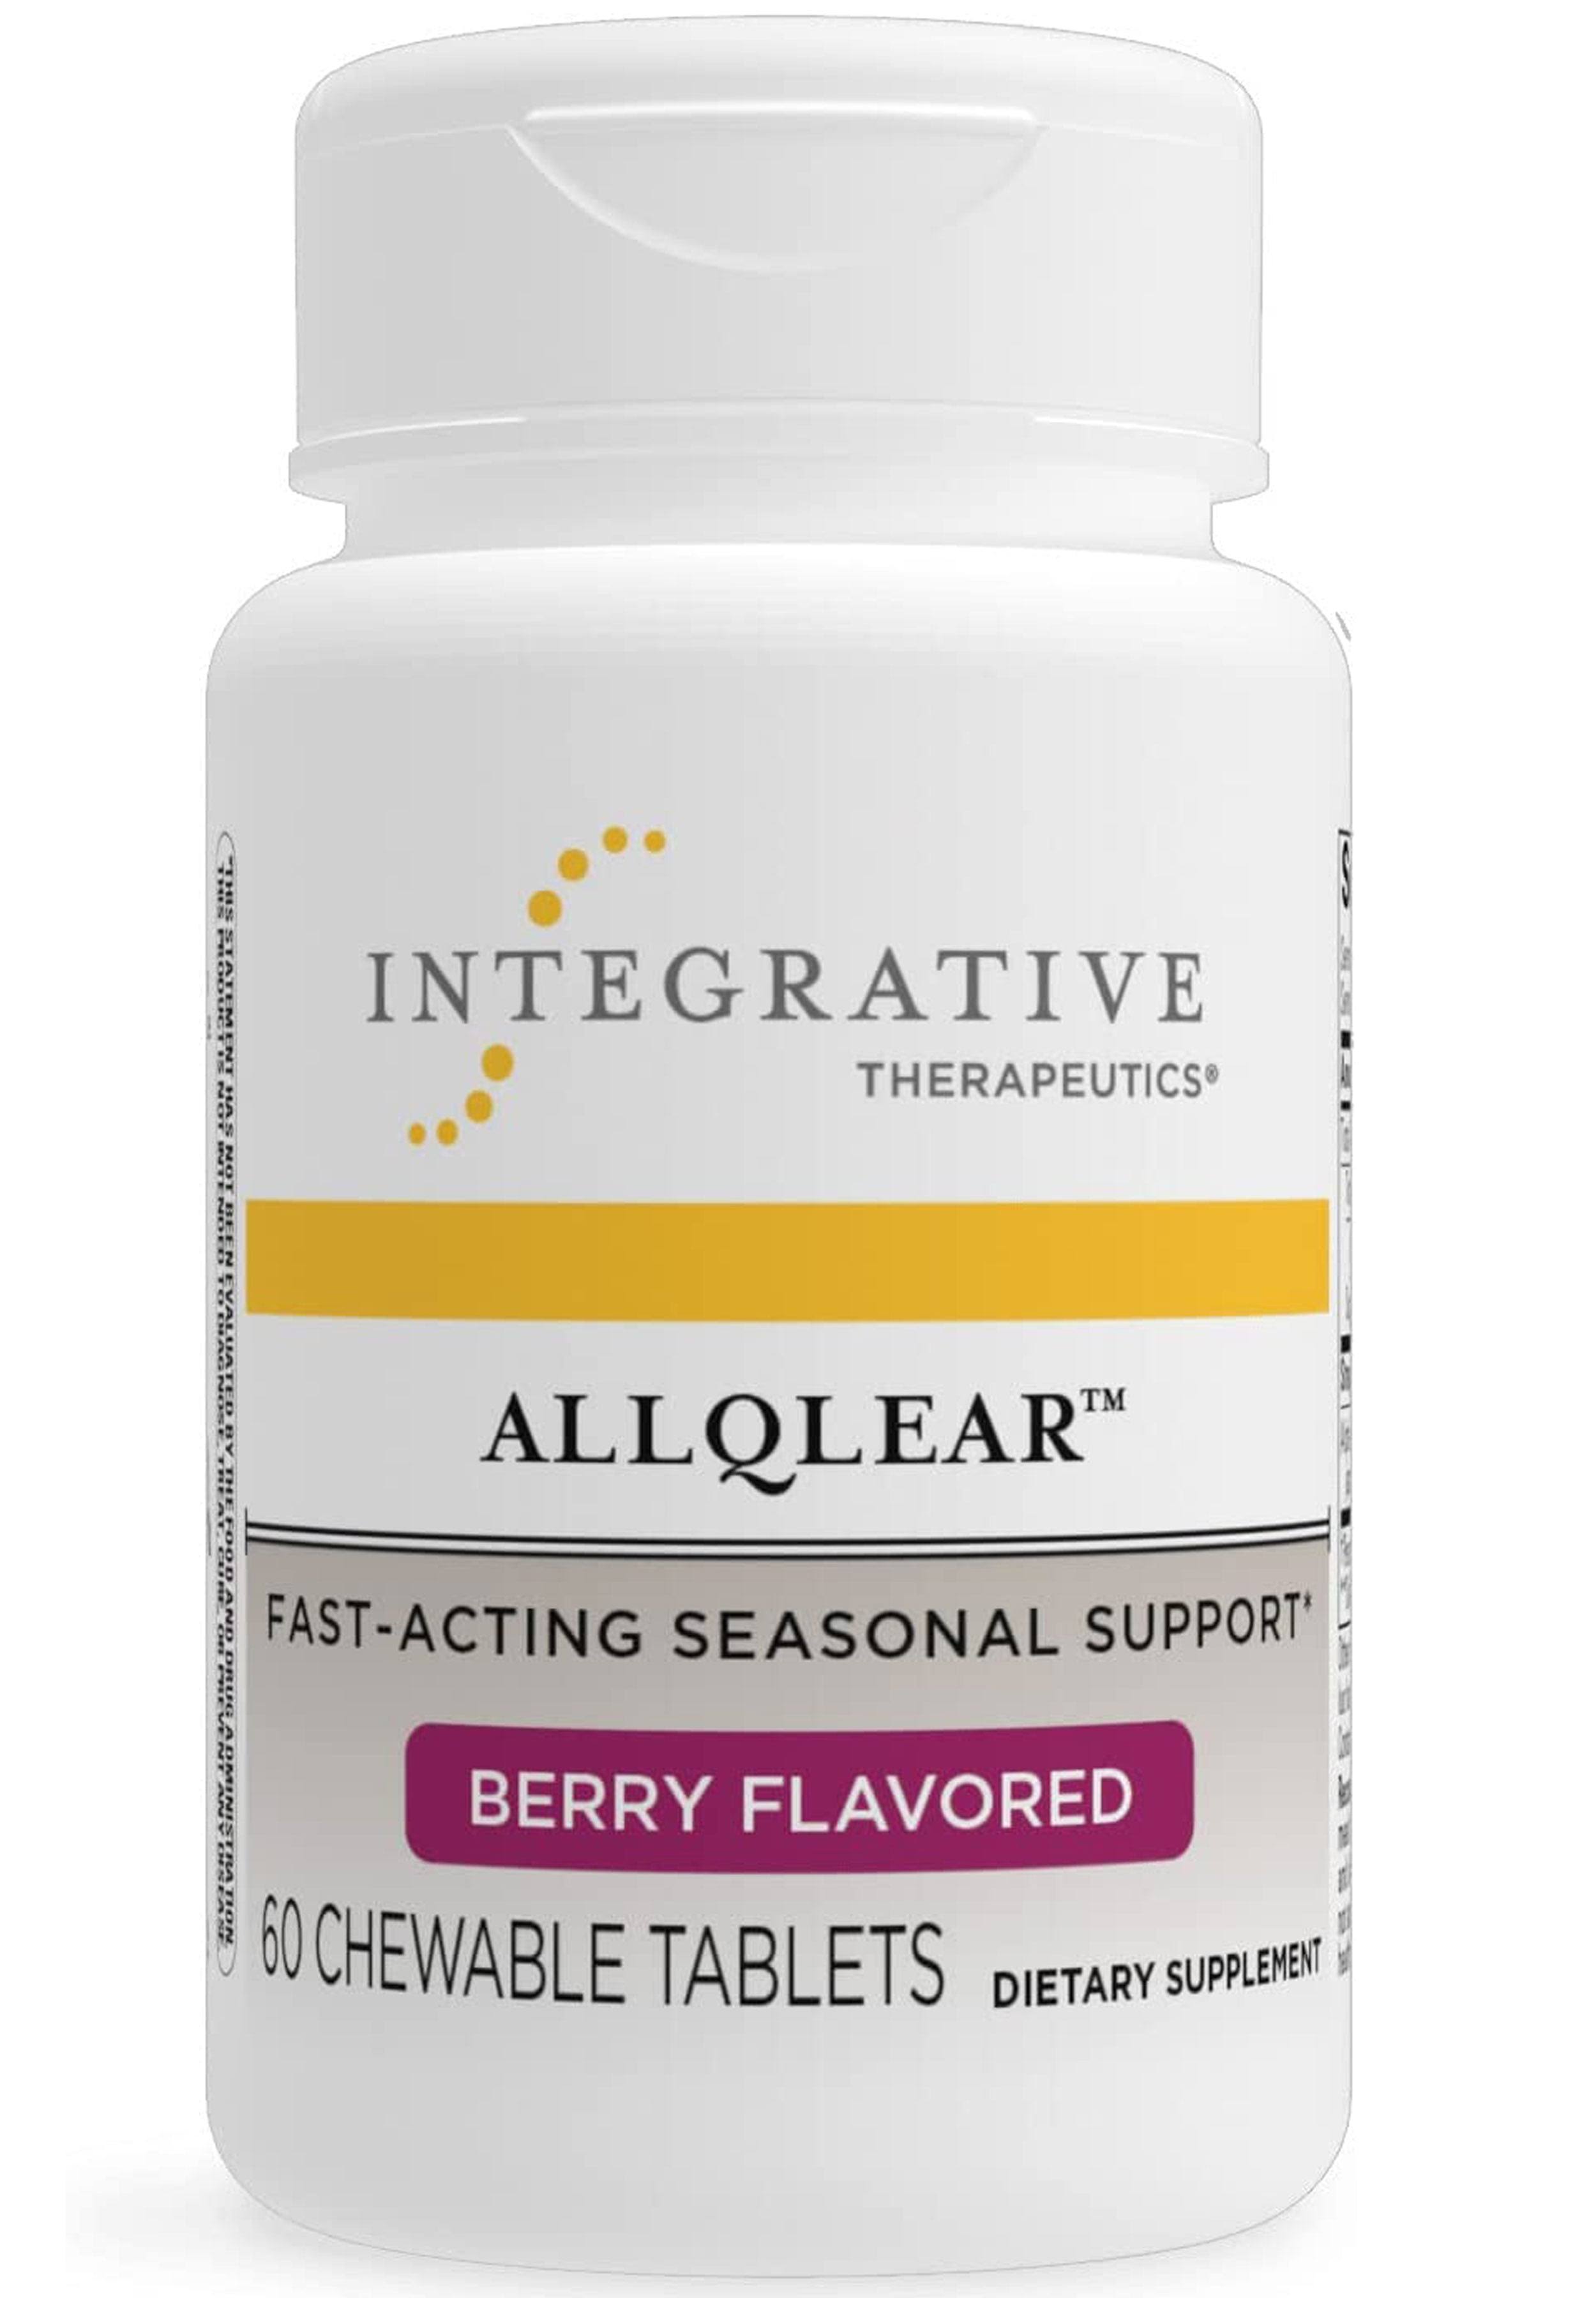 Integrative Therapeutics AllQlear Fast-Acting Seasonal Support - Berry